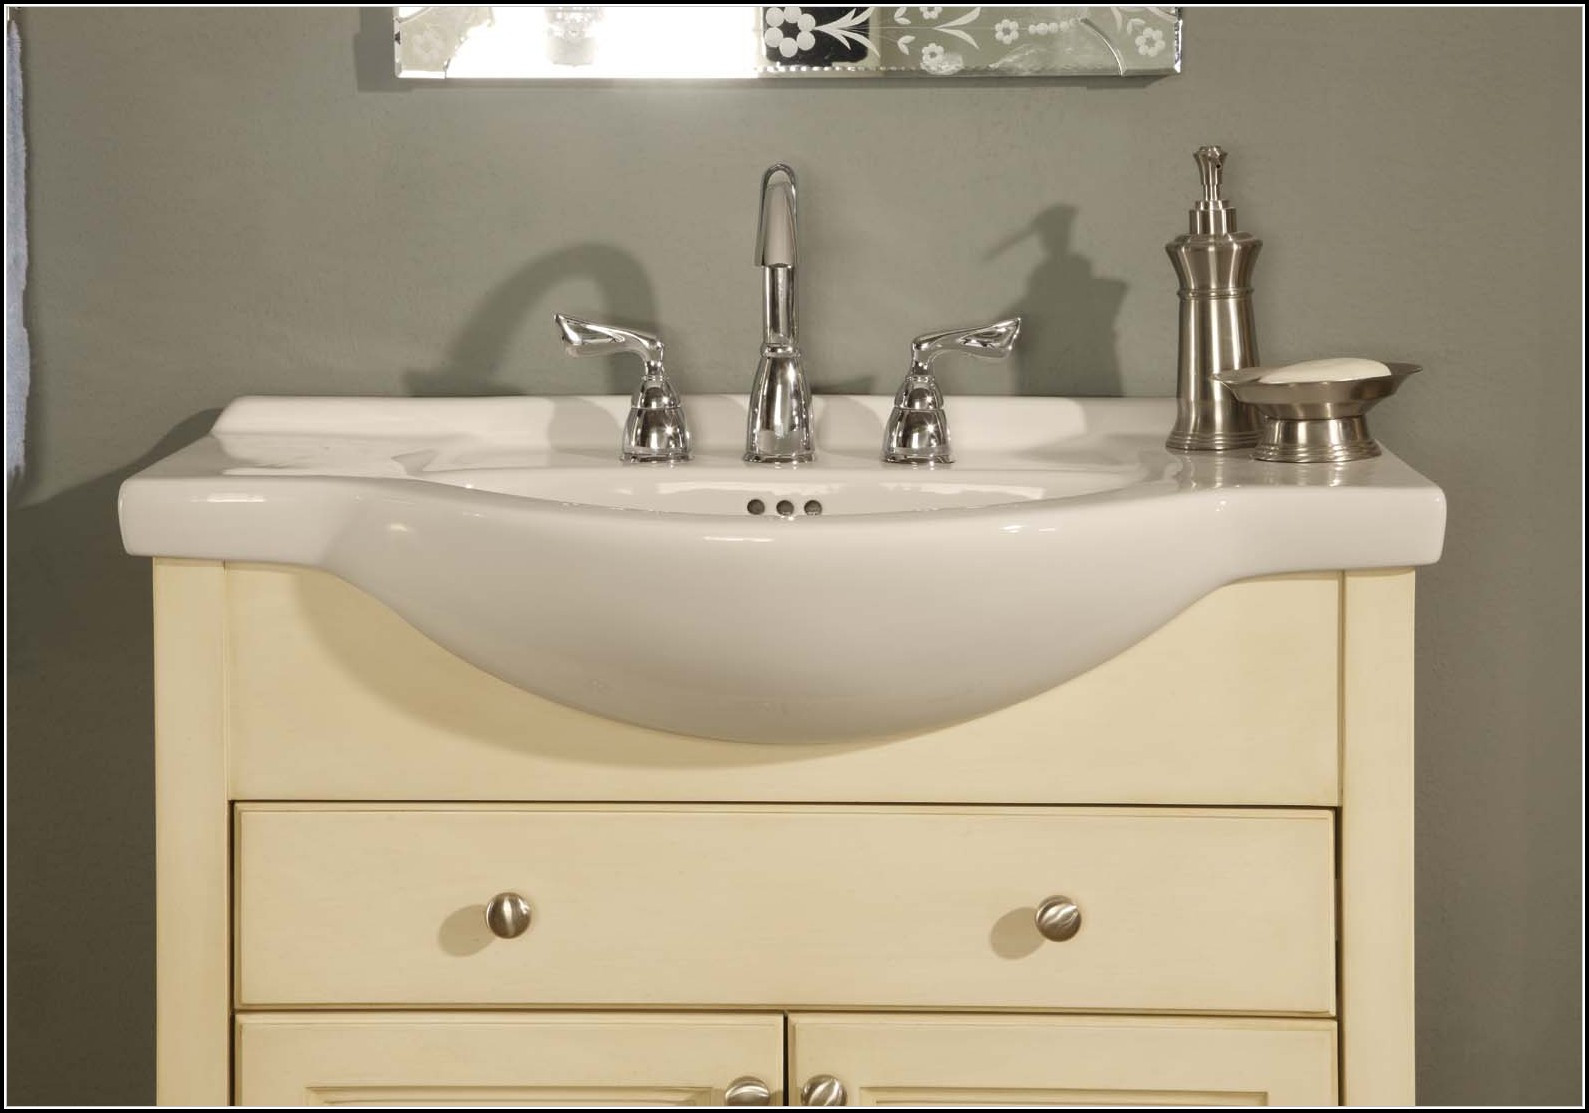 12 Inch Bathroom Sink Vanity
 12 Inch Depth Bathroom Vanity Cabinet Home Decorating